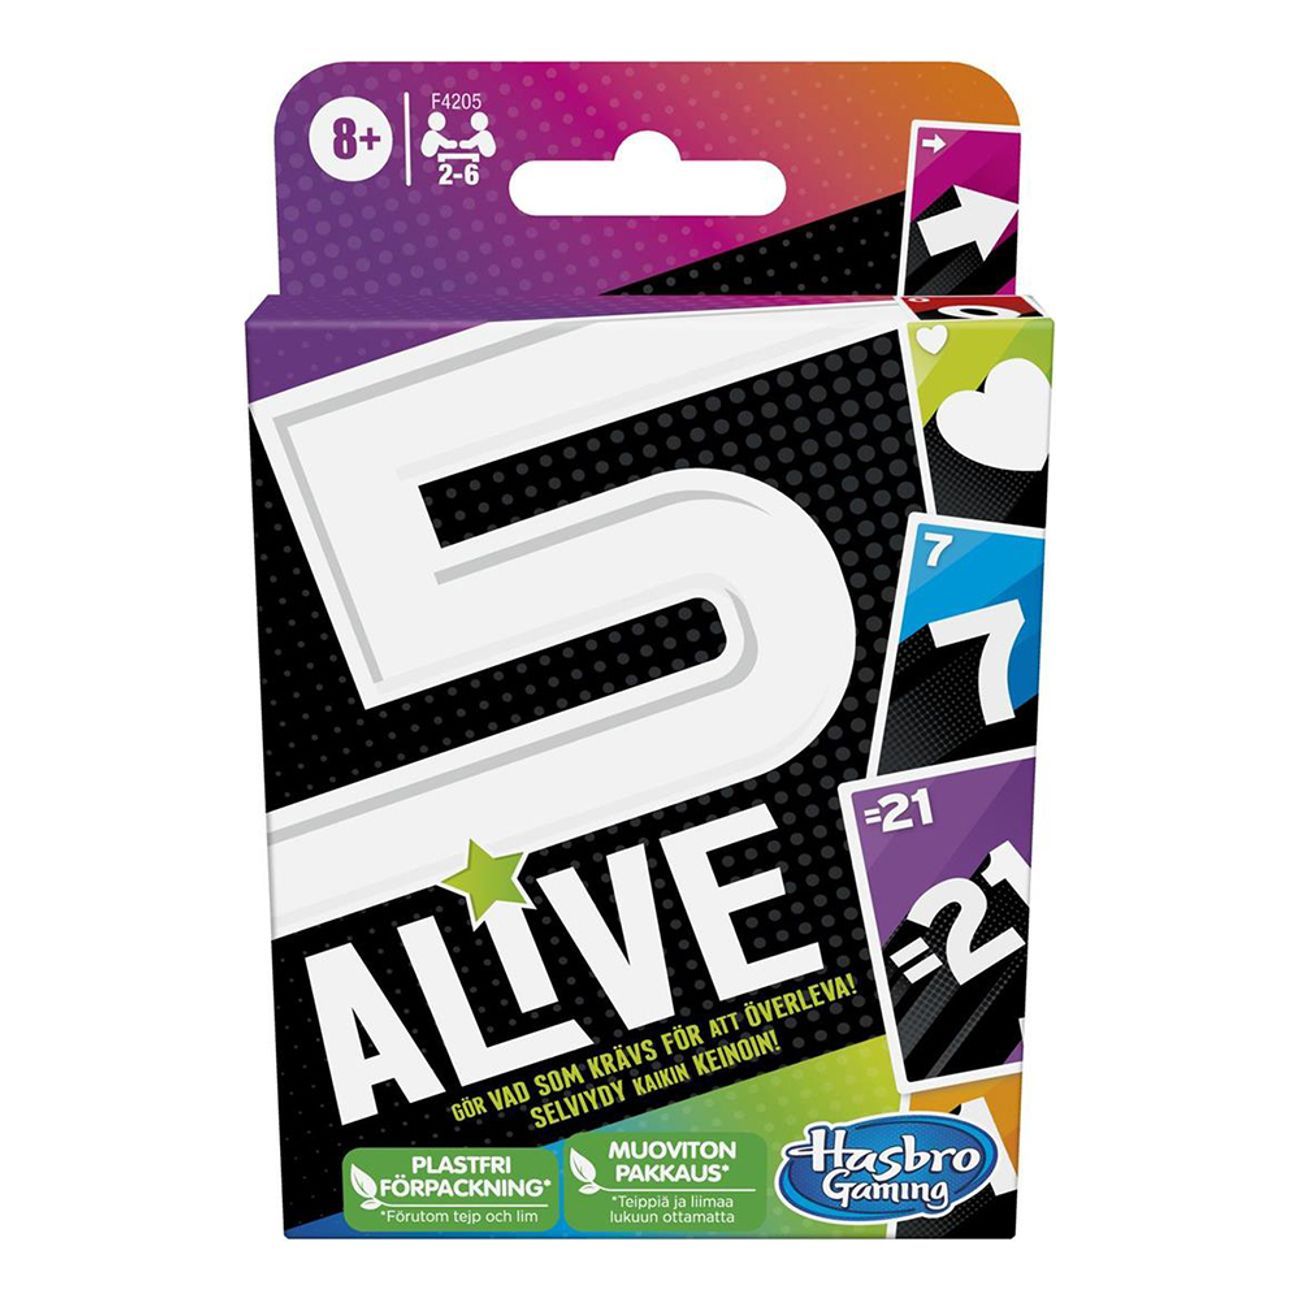 5-alive-kortspill-91684-1